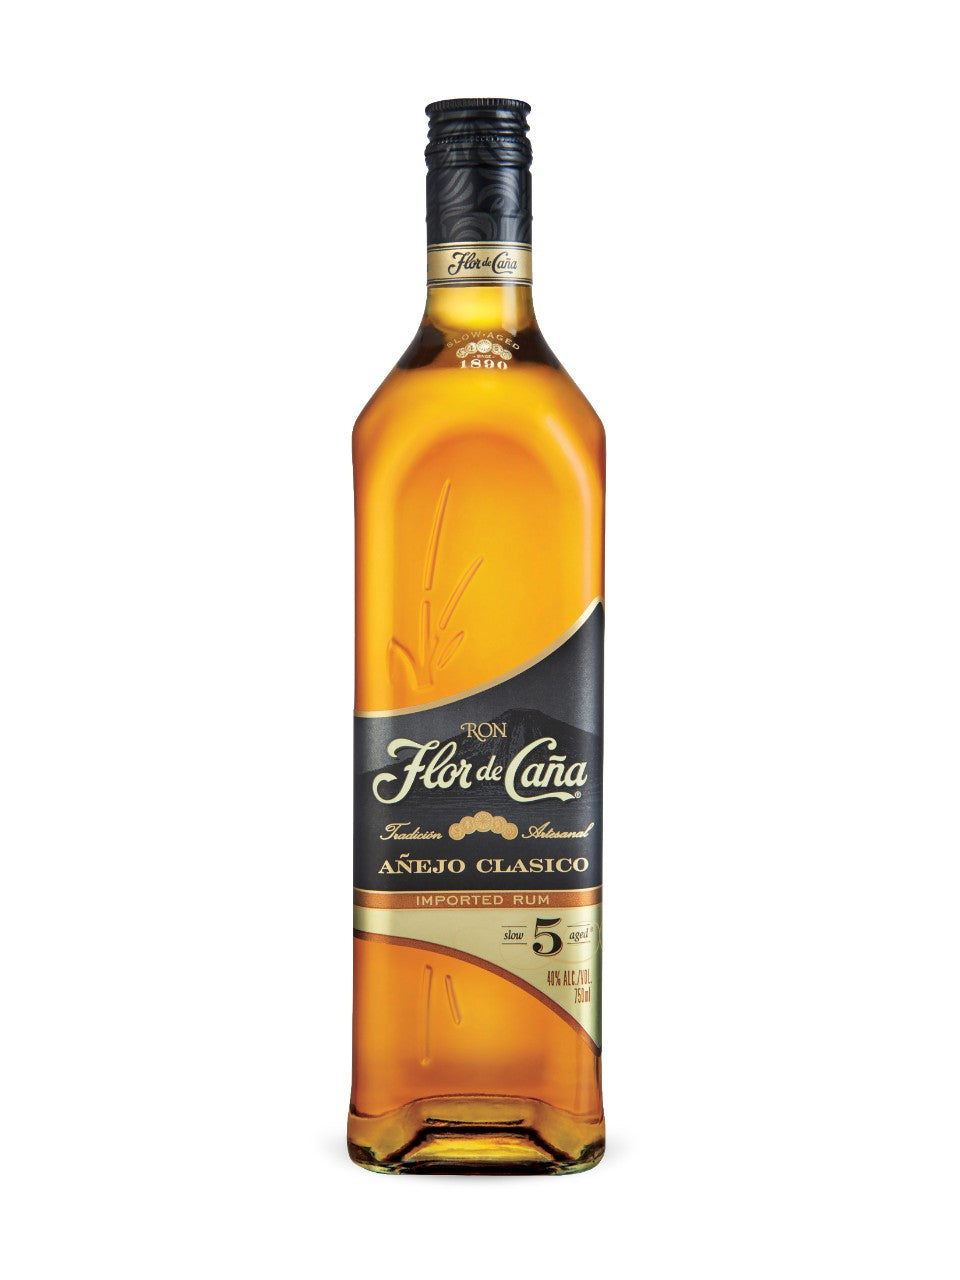 Flor de Caña 5 Year Rum (Añejo Clásico) 750 mL bottle